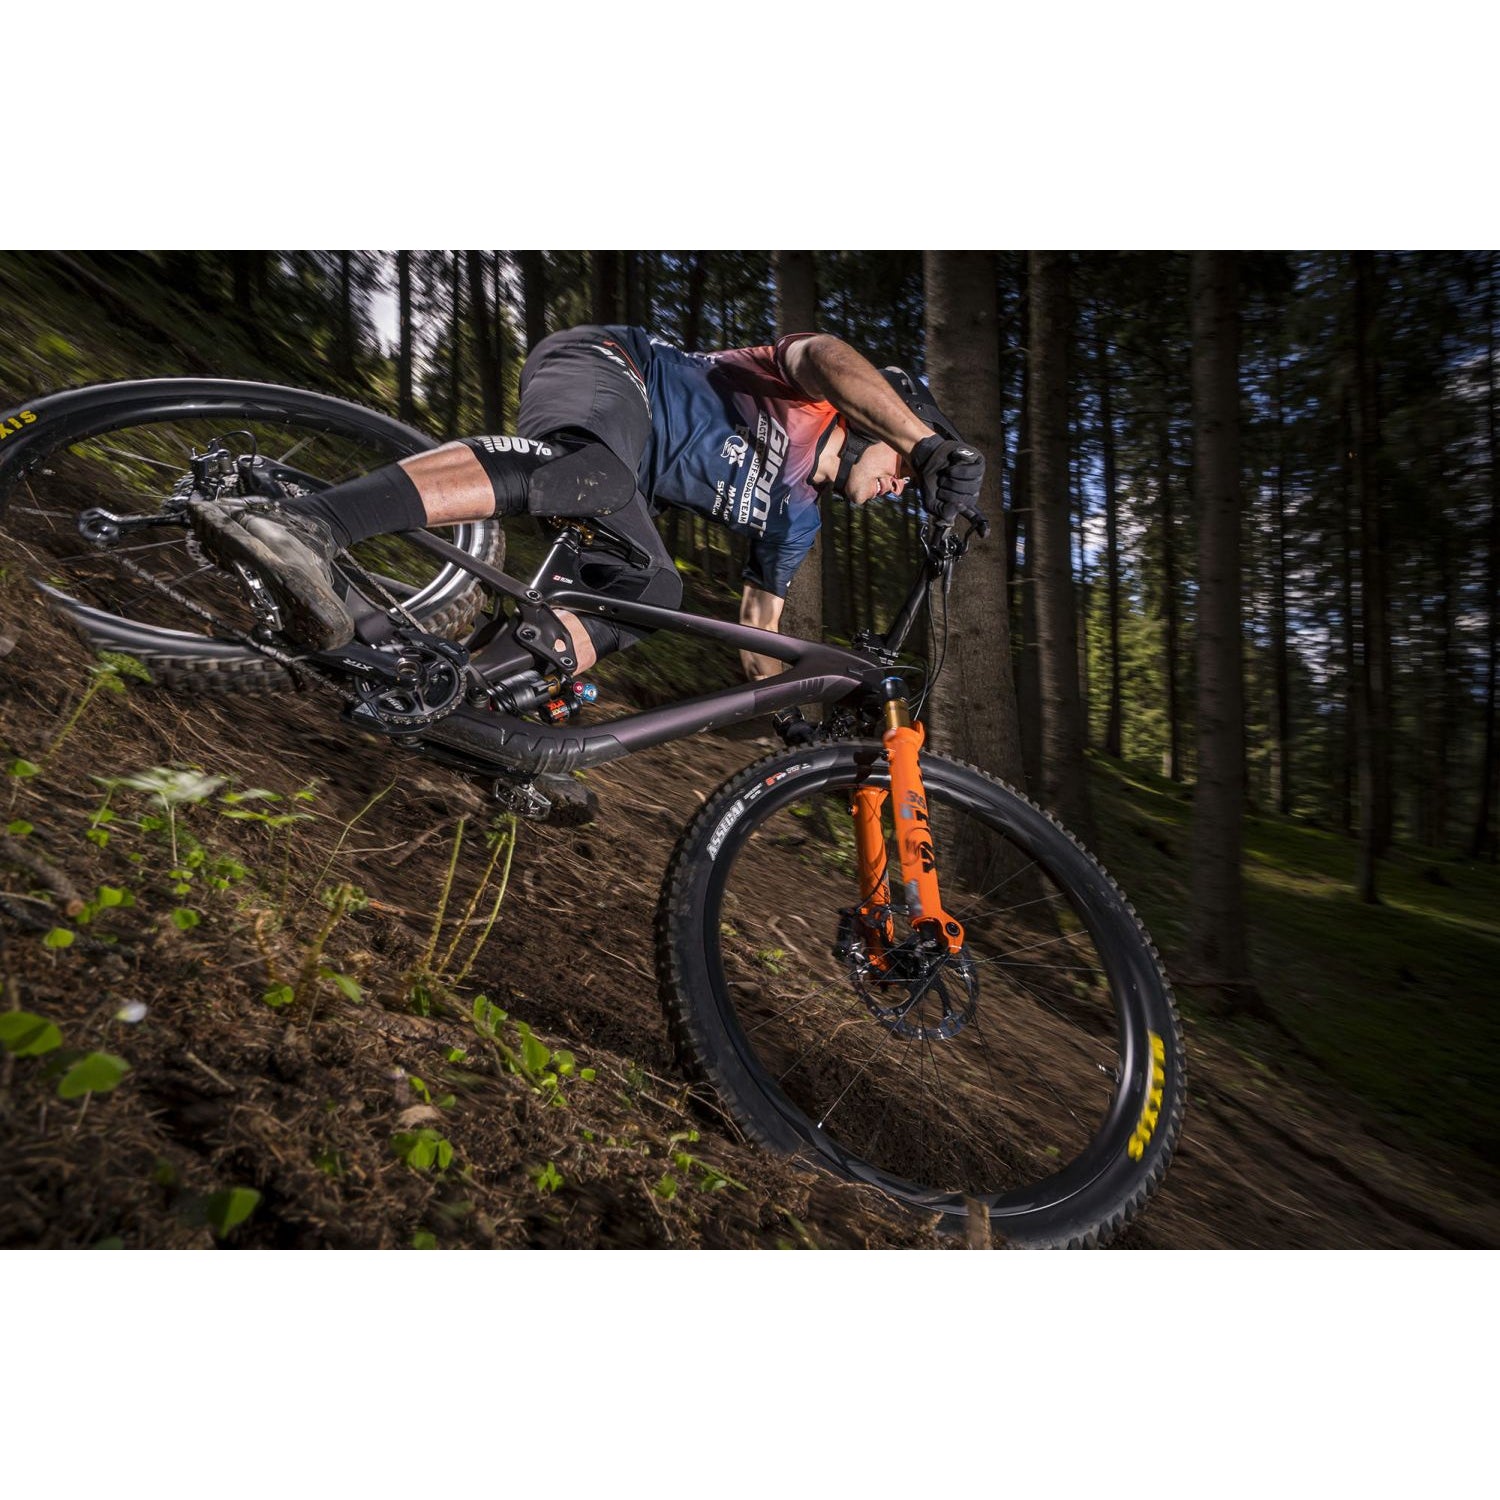 Giant Trance X Advanced Pro 29 2 Mountain Bike - Bikes - Bicycle Warehouse